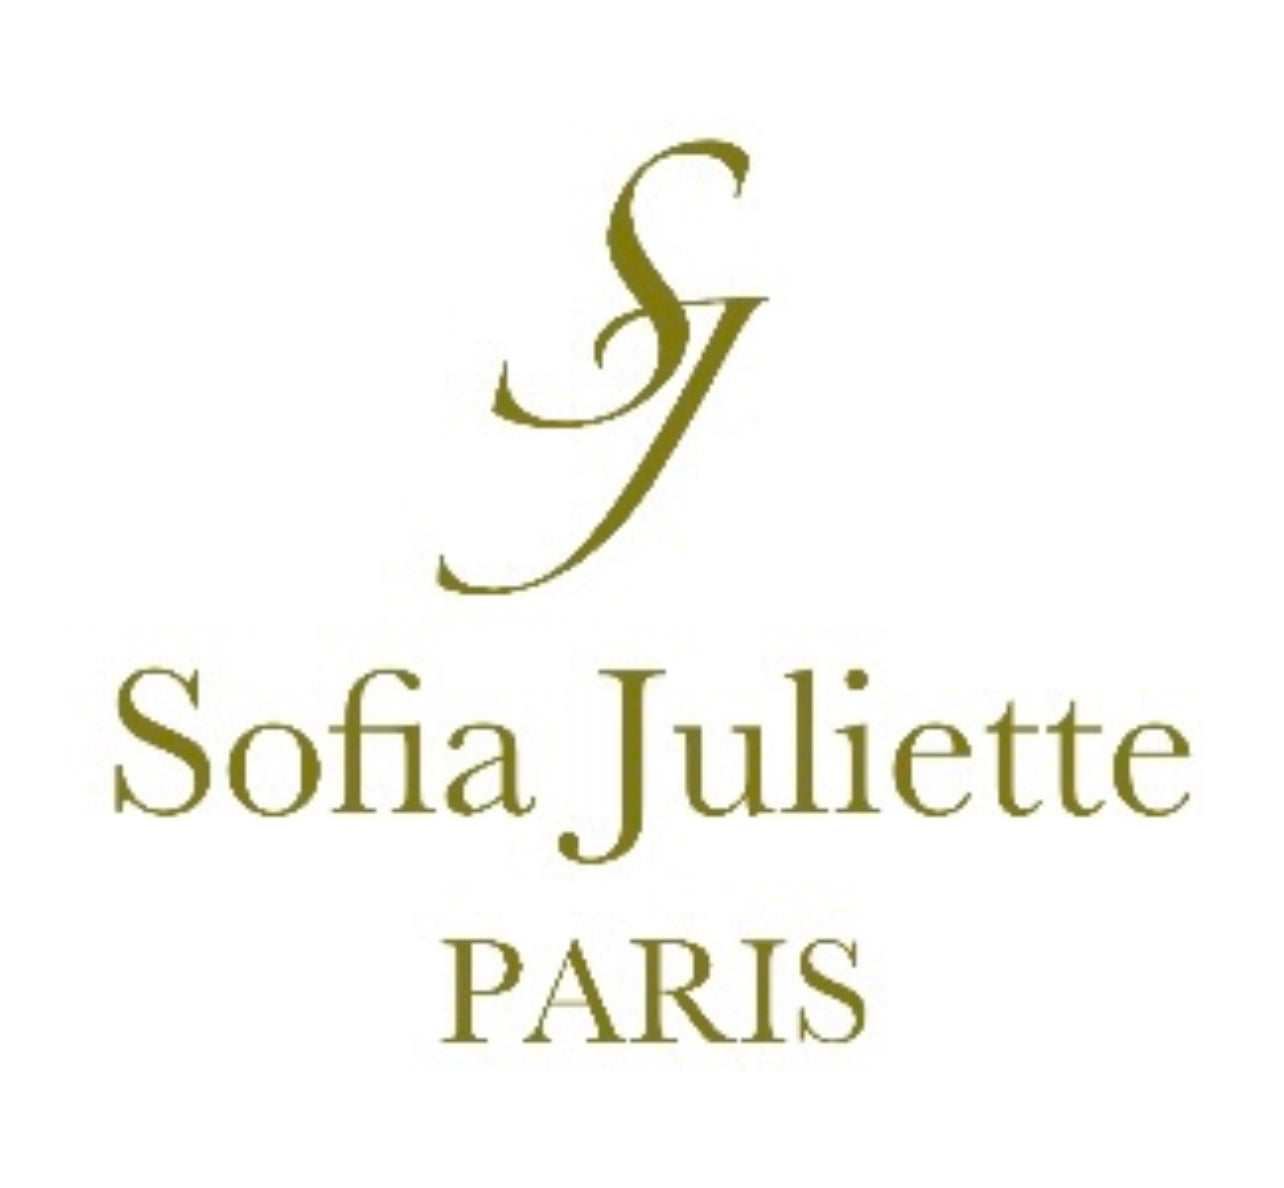 Sofia Juliette